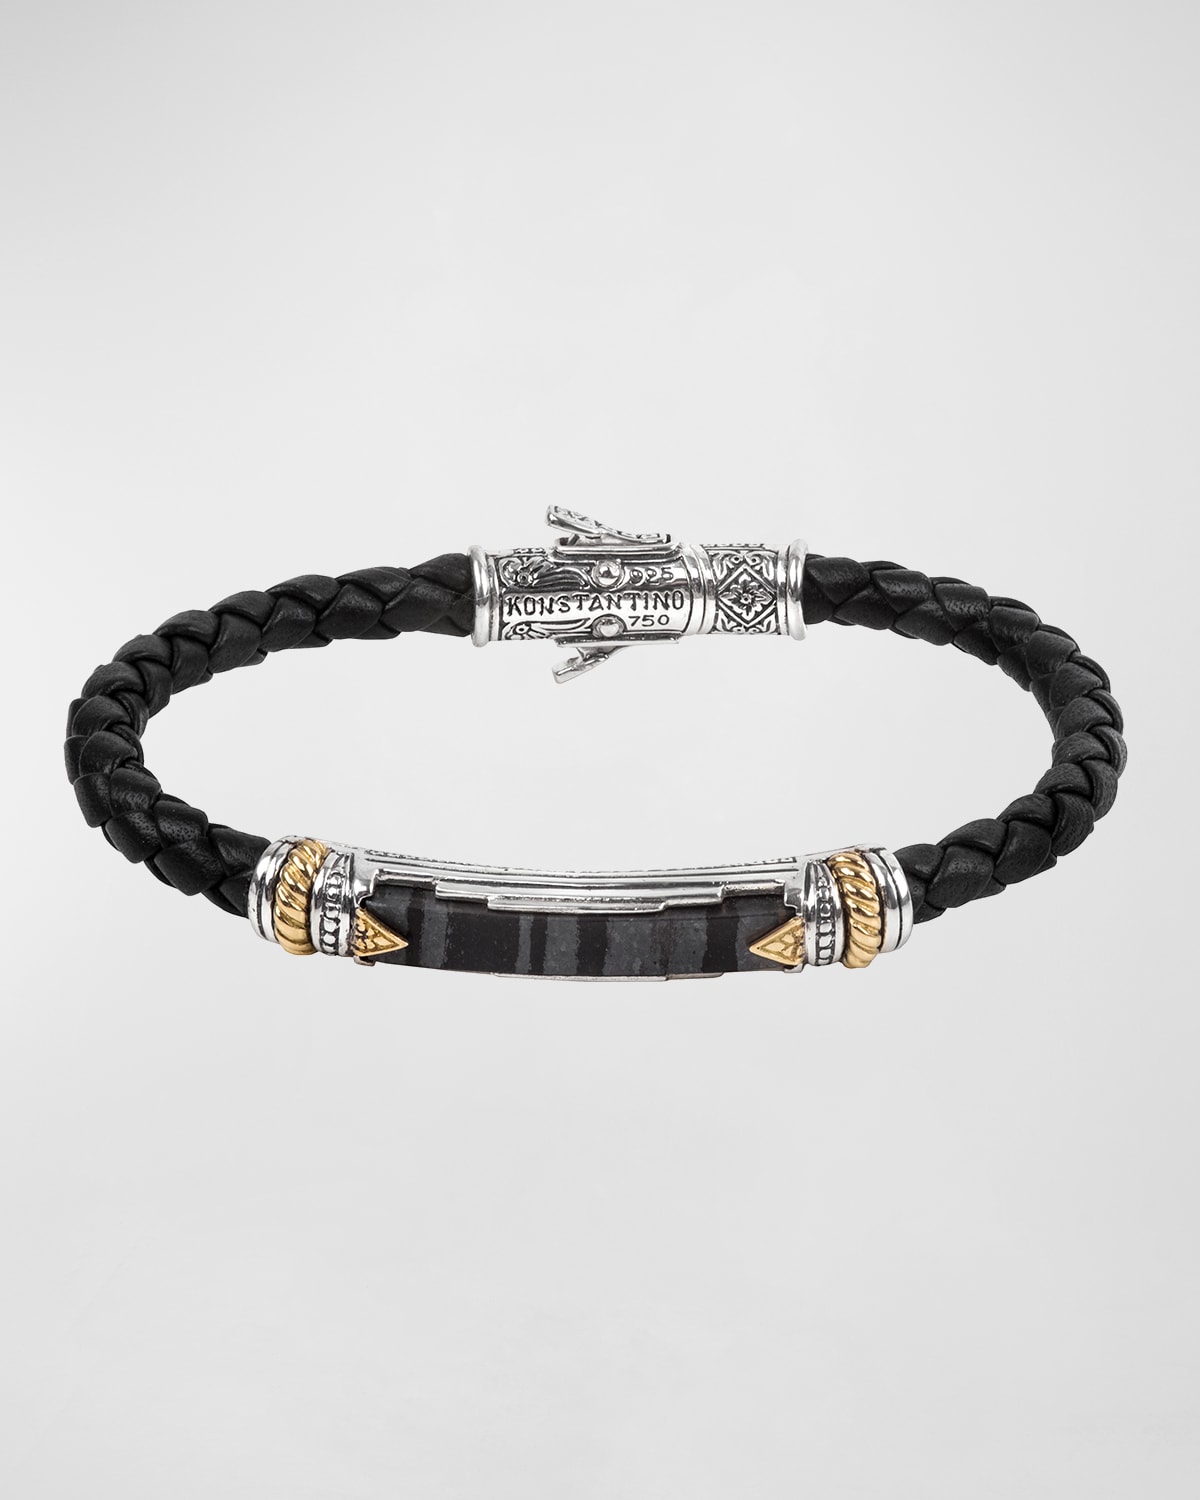 18K Gold/Silver Braided Leather Ferrite Bar Bracelet